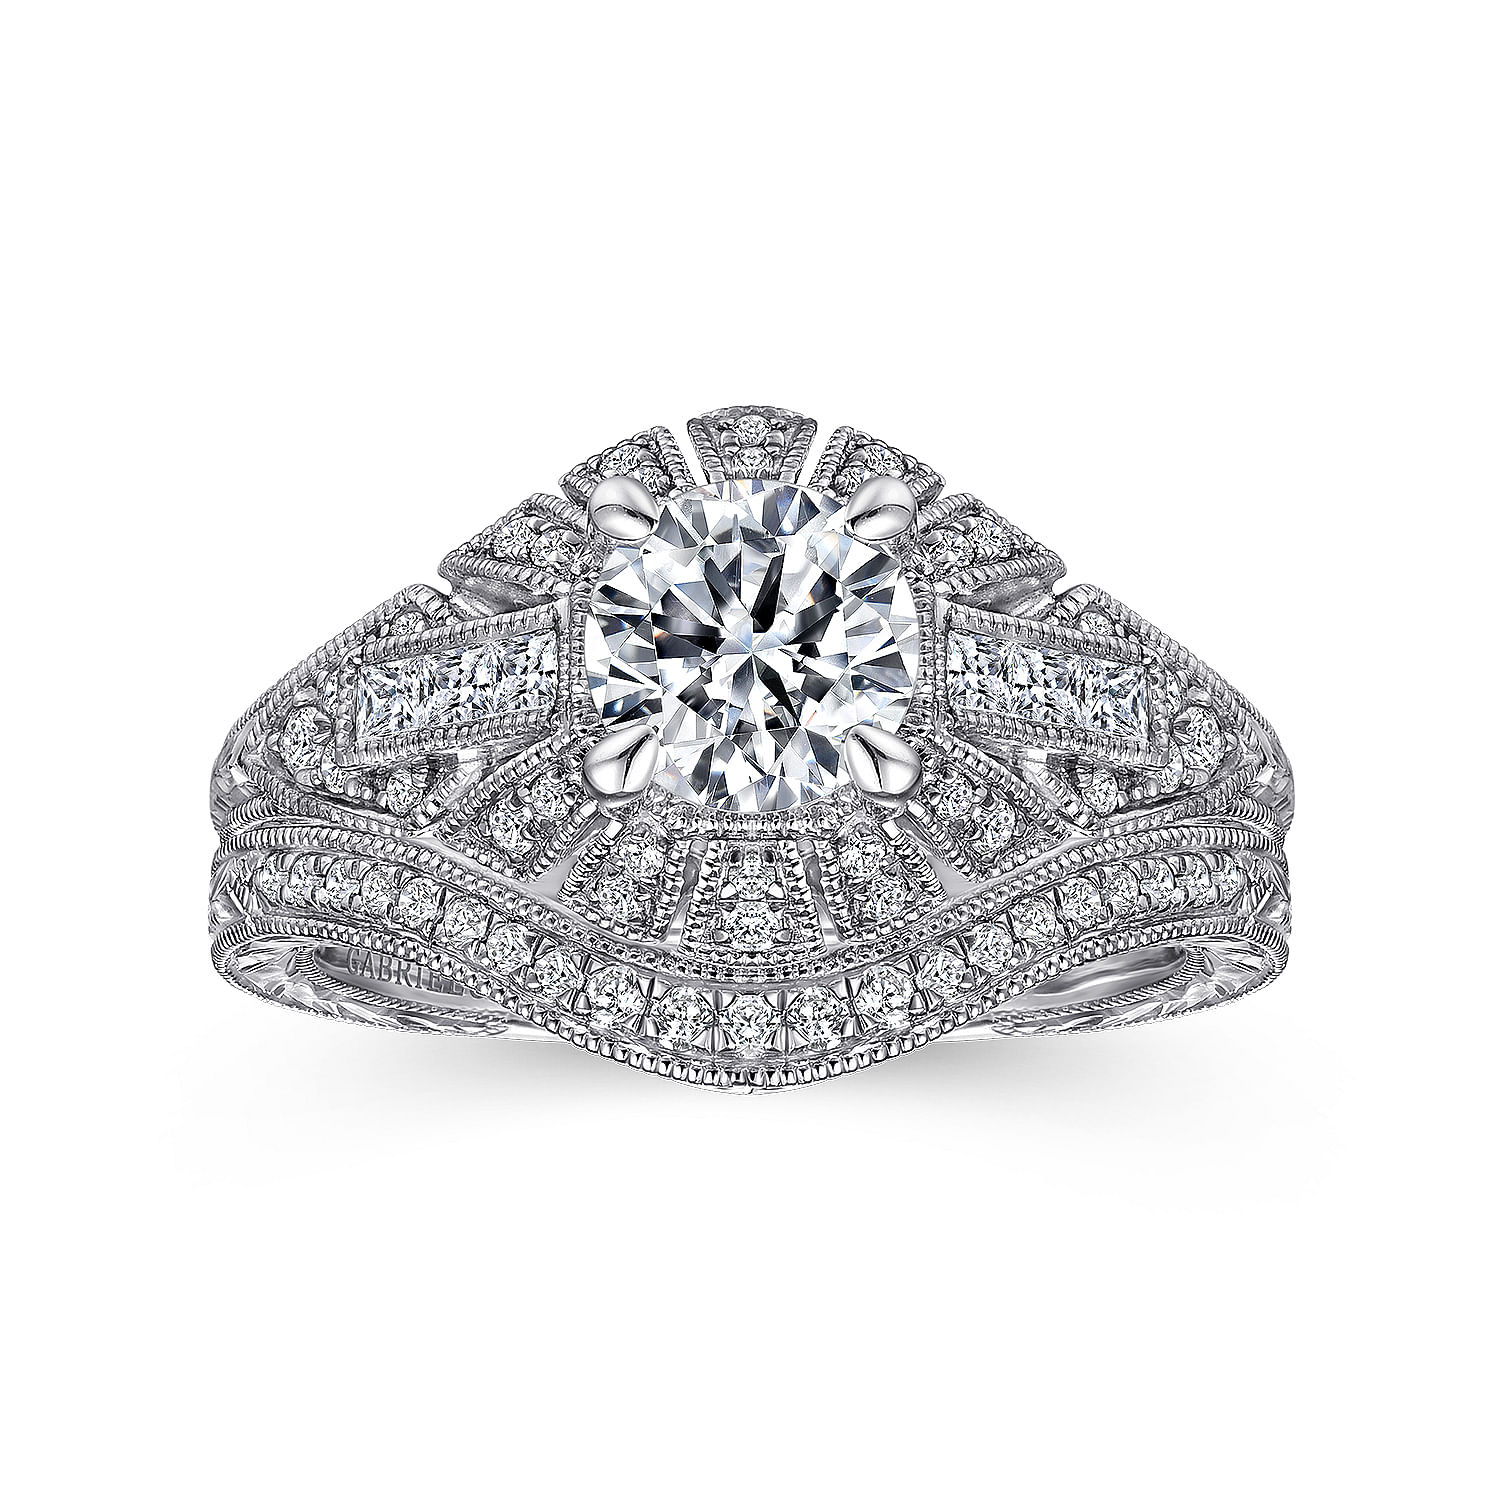 Vintage Inspired 14K White Gold Round Diamond Channel Set Engagement Ring